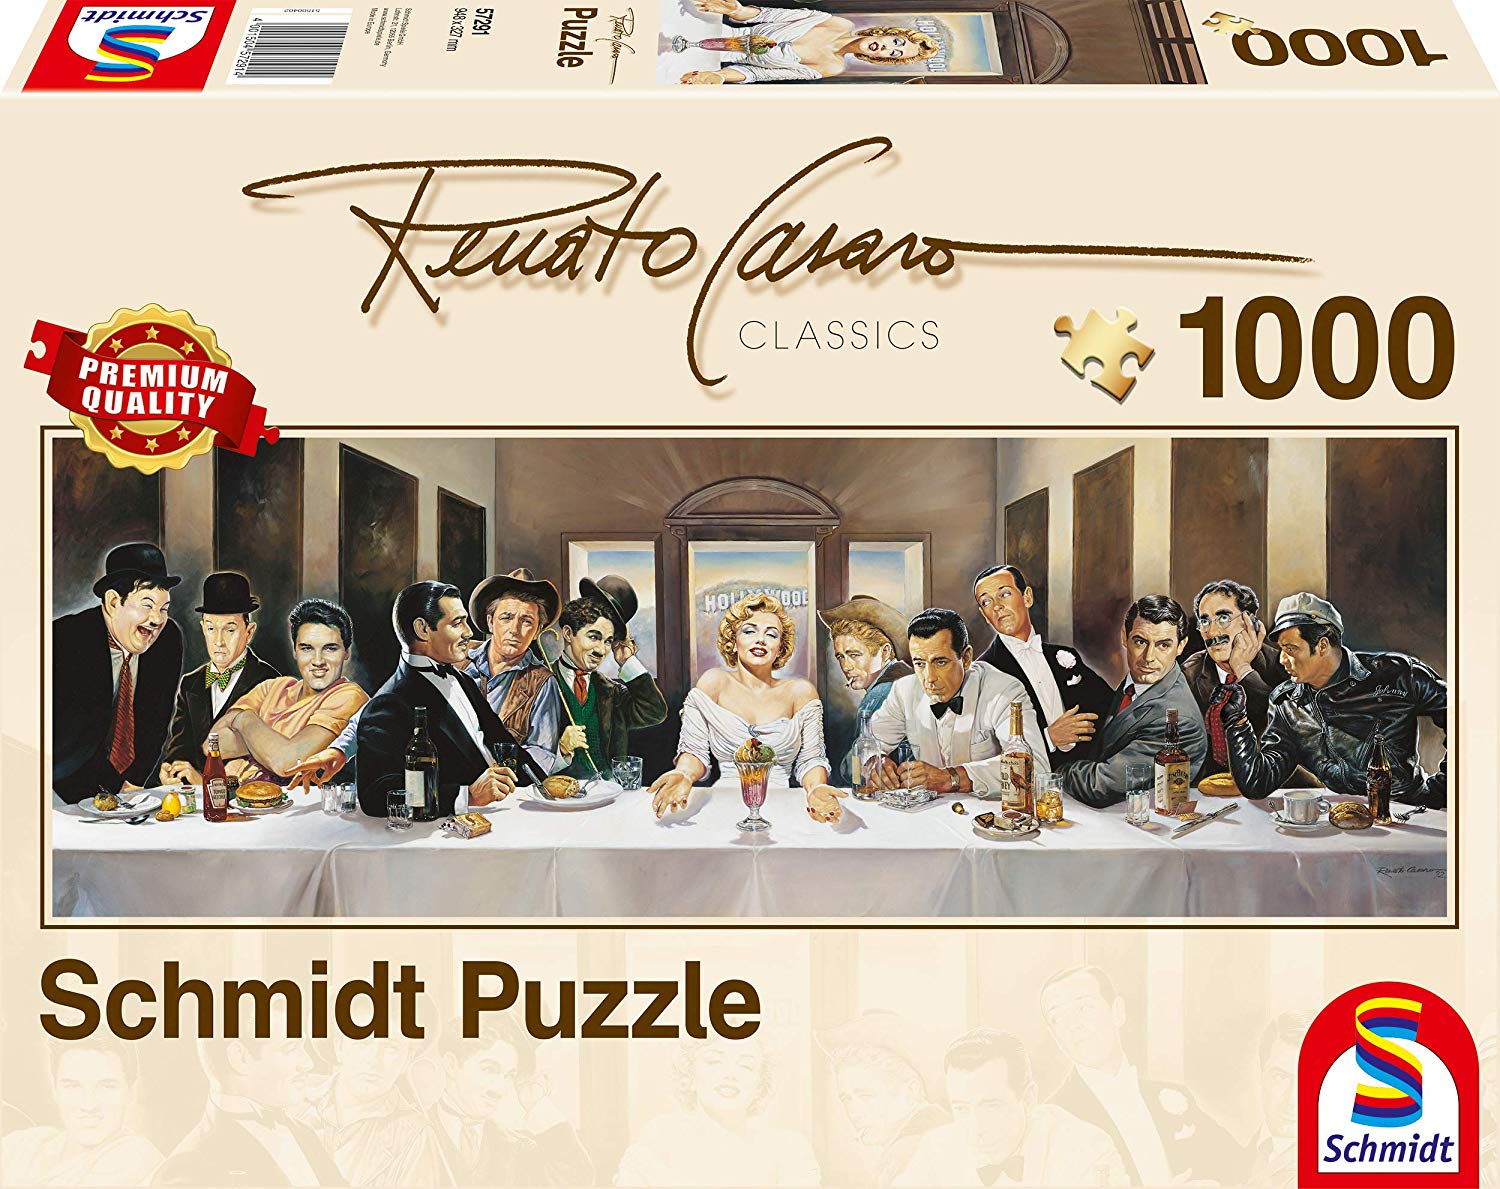 Renato Casaro - Panoramapuzzle, Dinner der Berühmten  - 1000 Teile Puzzle